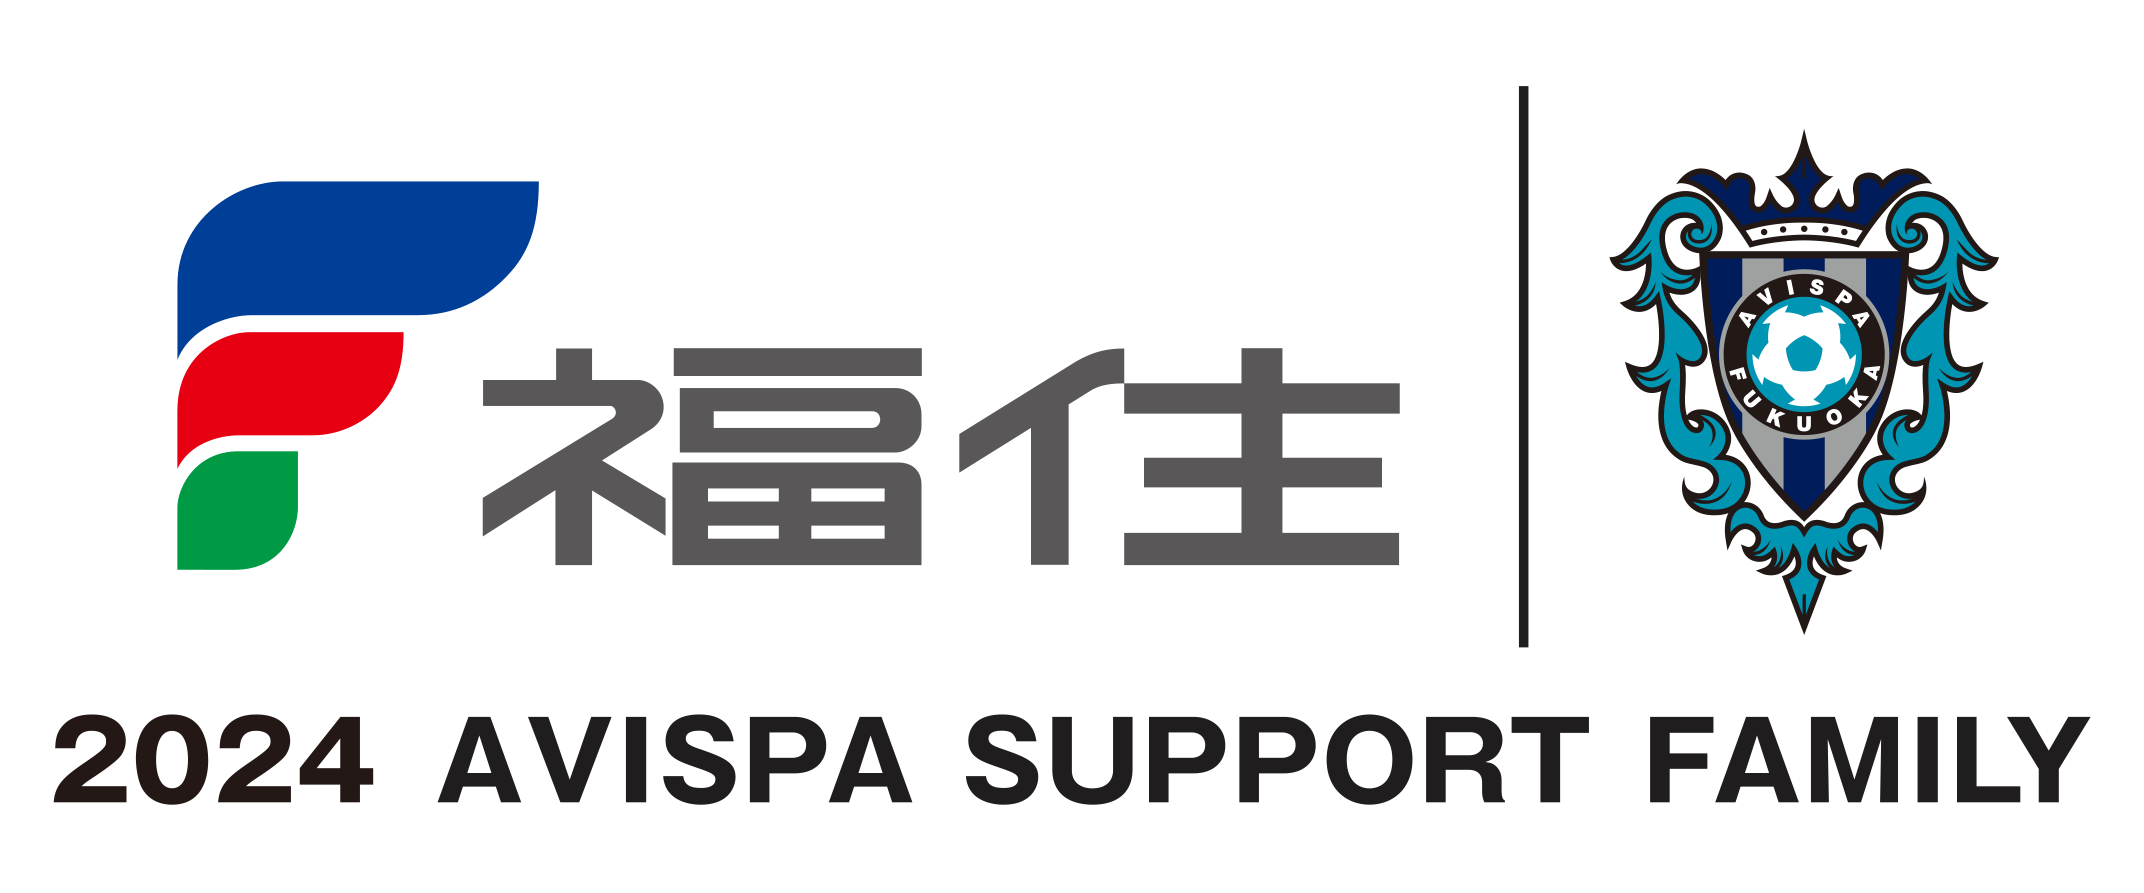 2024 AVISPA SUPPORT FAMILY